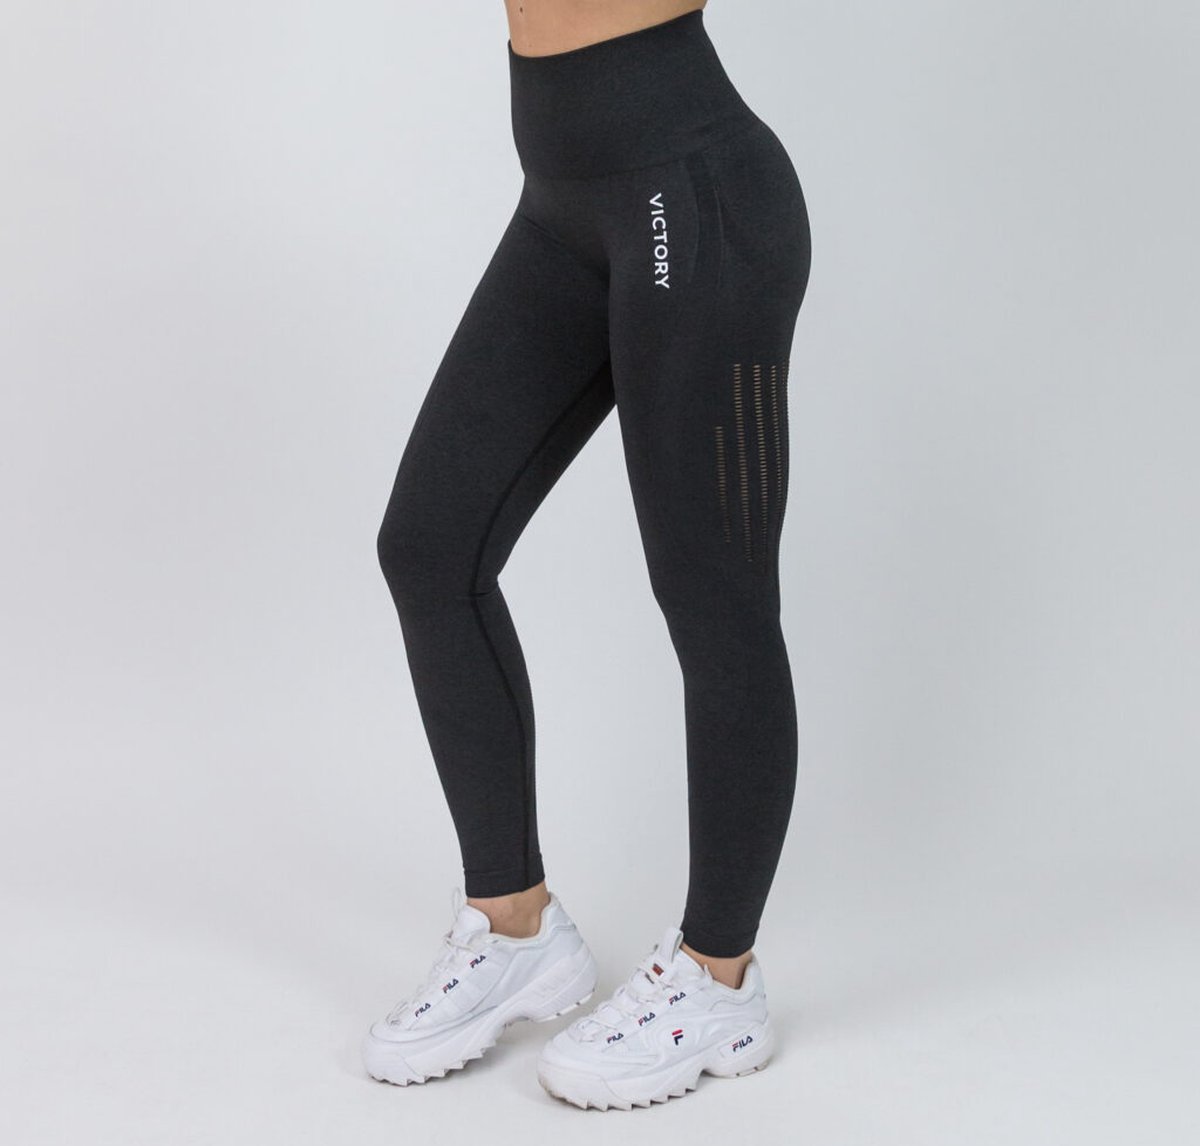 Victory Sportswear® - Dream - High Waist - Squat Proof Dames Sportlegging - Fitness Yoga Hardlopen - Zwart Maat M/L